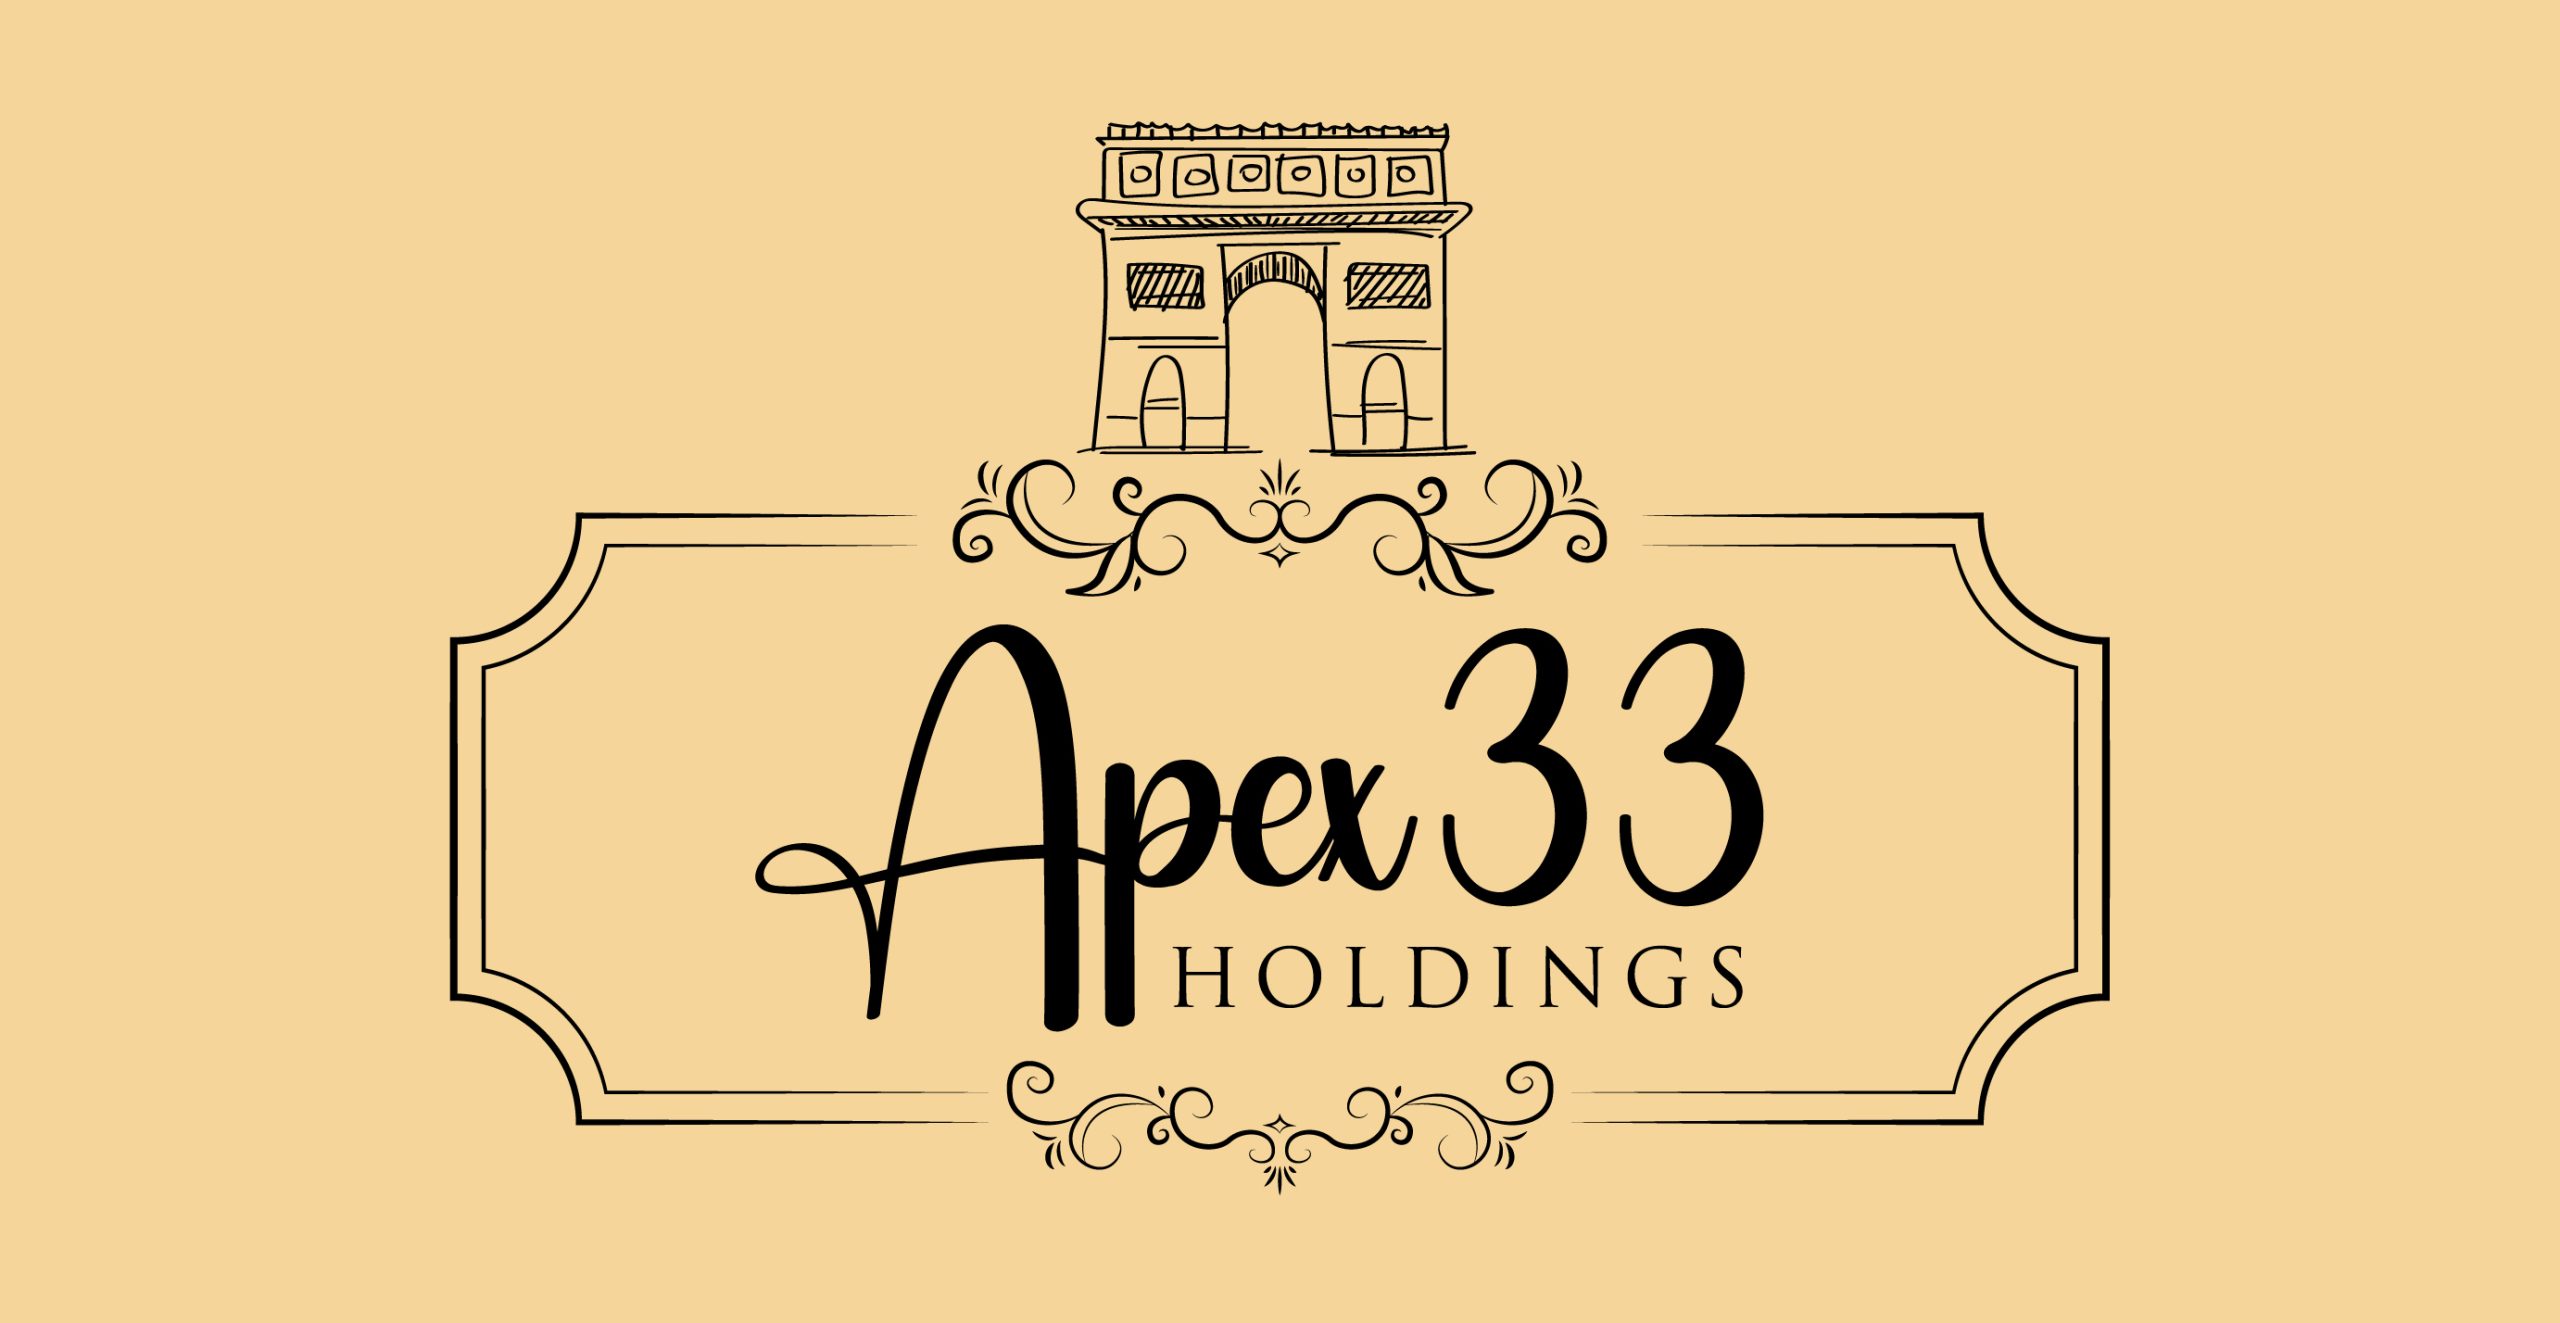 Apex33 Holdings